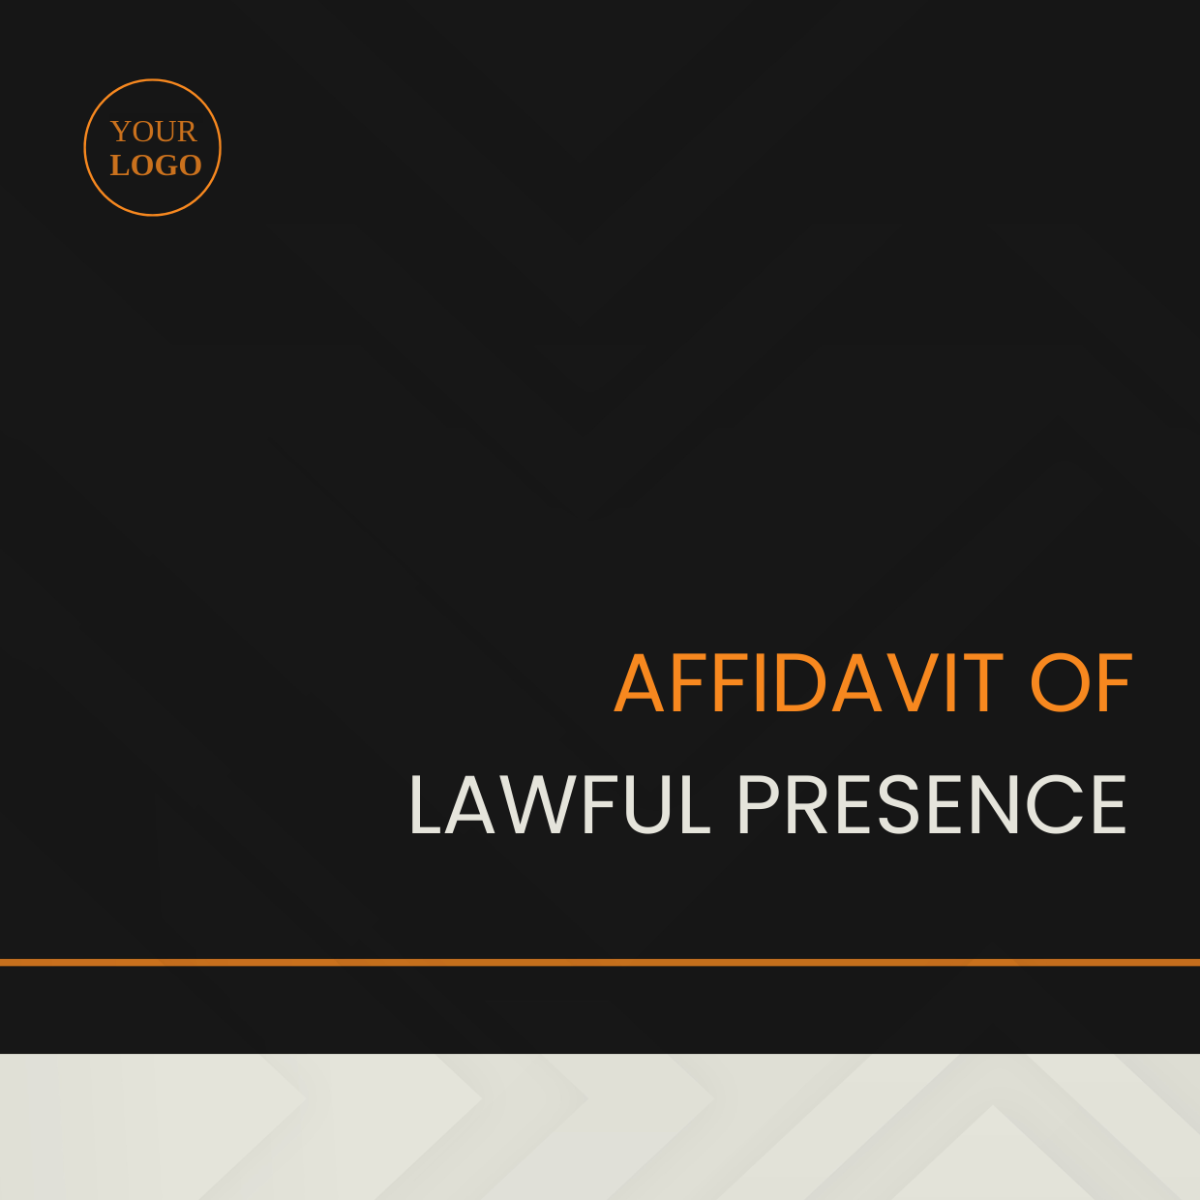 Affidavit of Lawful Presence Template